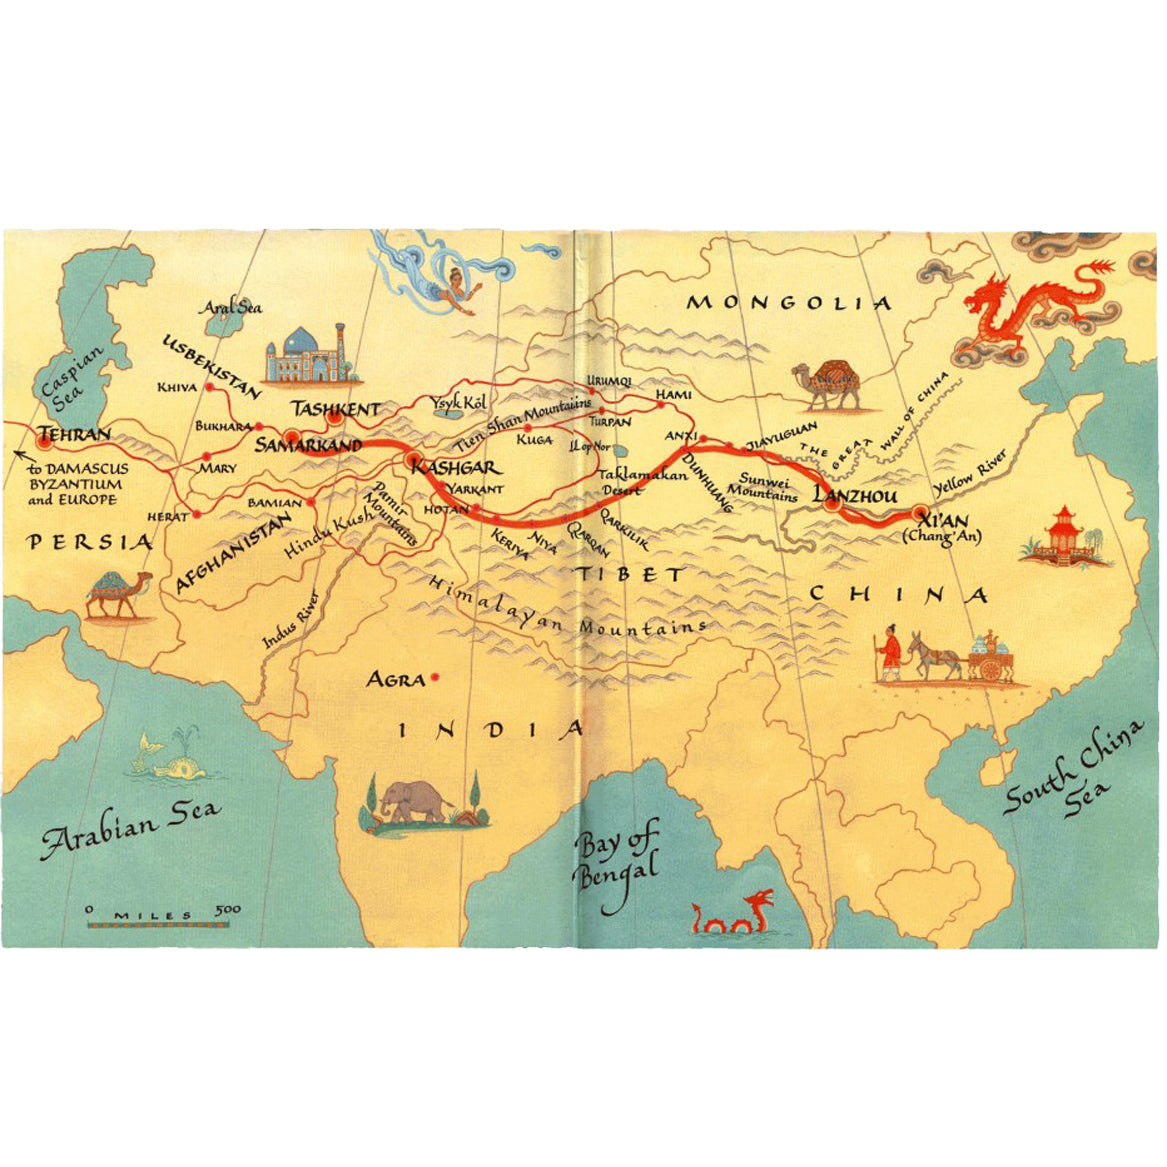 History of the Tea Trade: The Silk Road | Heavenly Tea Leaves Blog